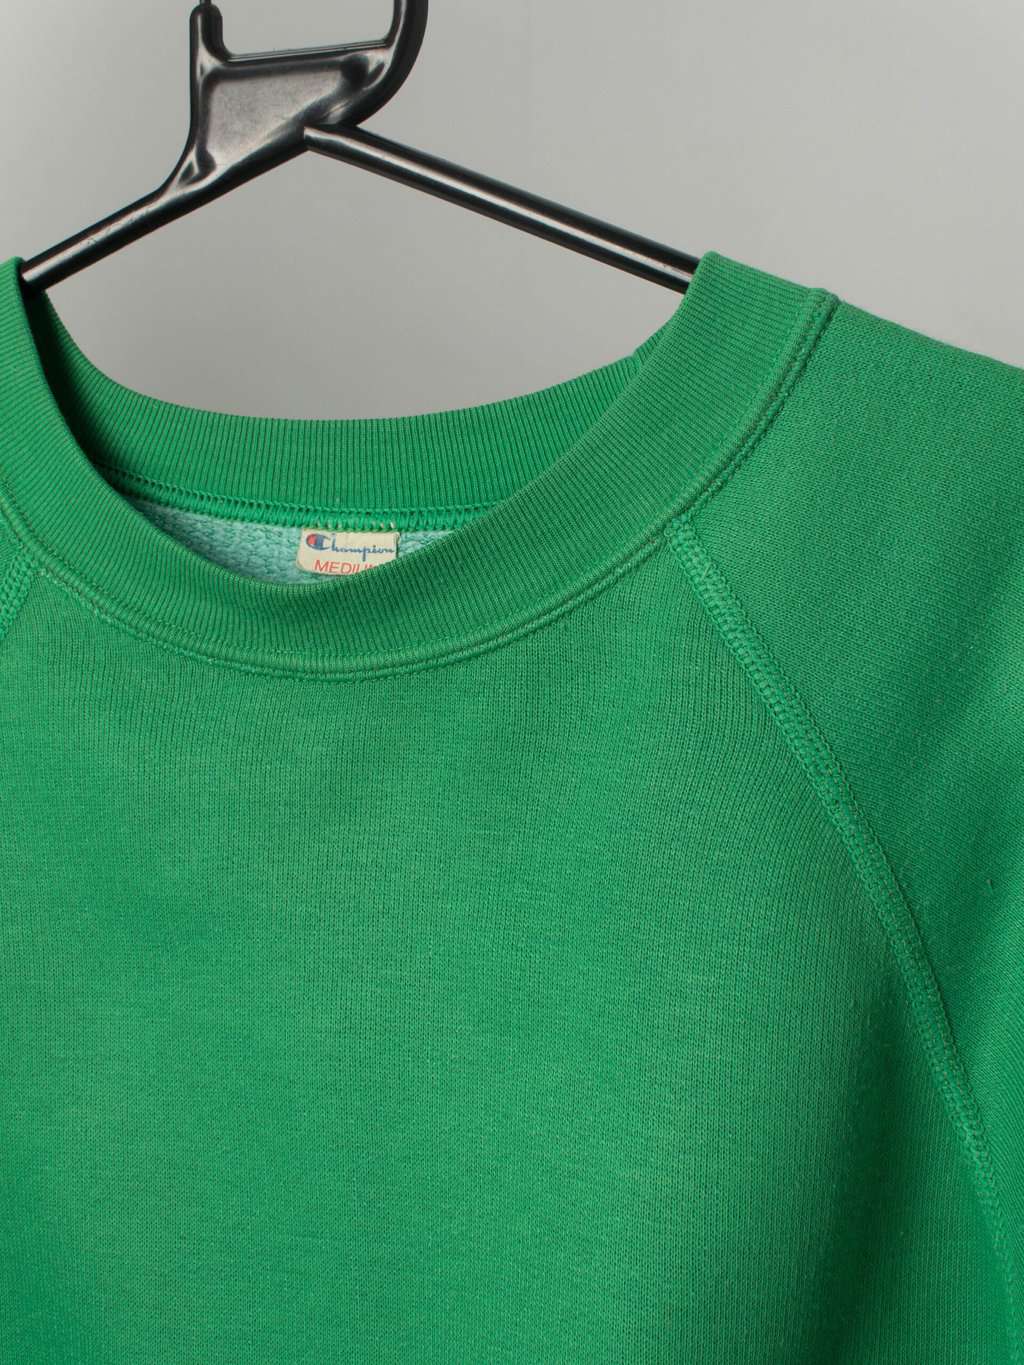 Vintage 80s champion sweatshirt bold green - Medium